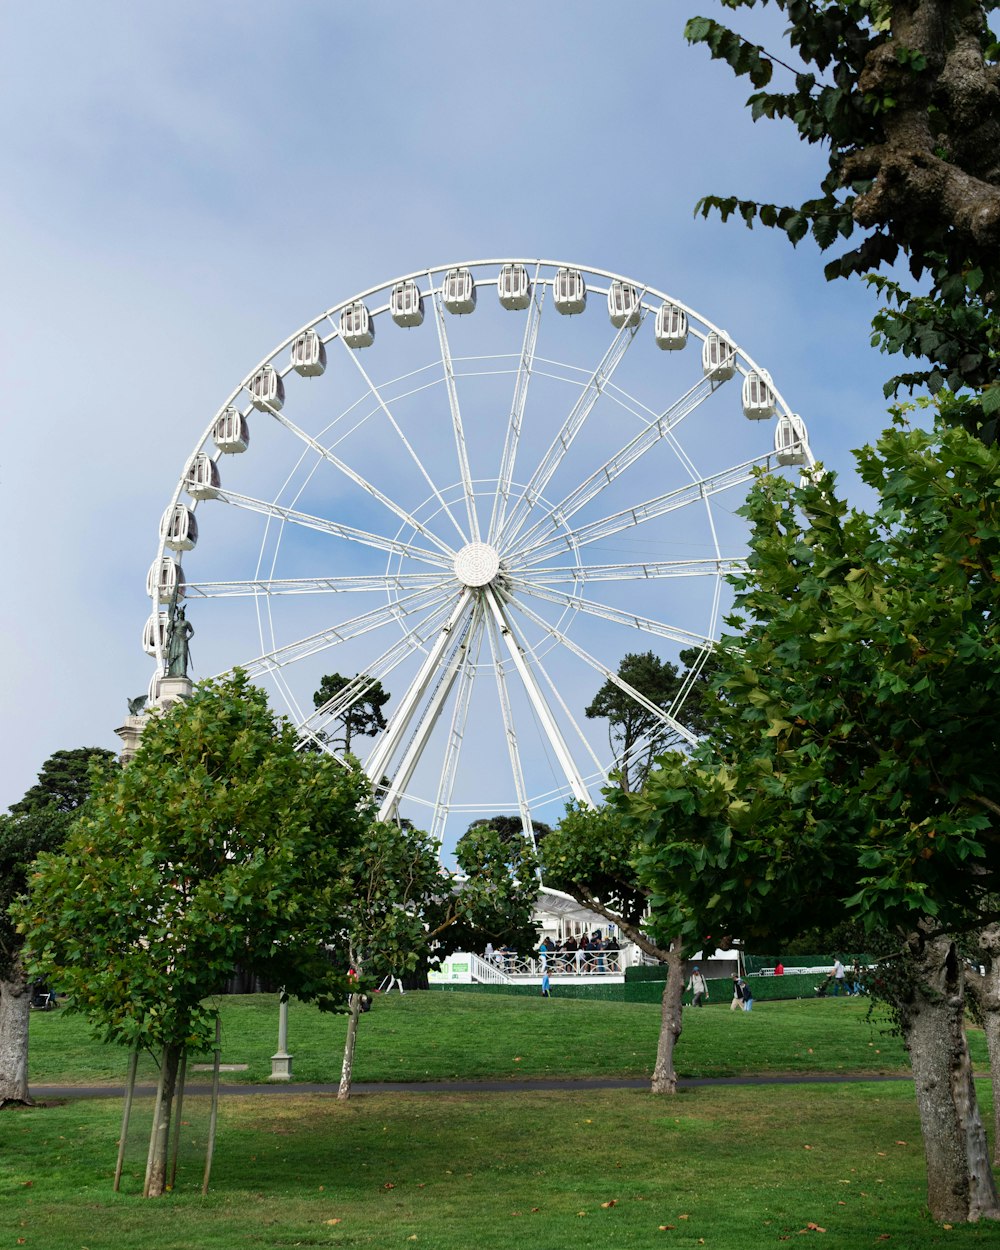 a large ferris wheel